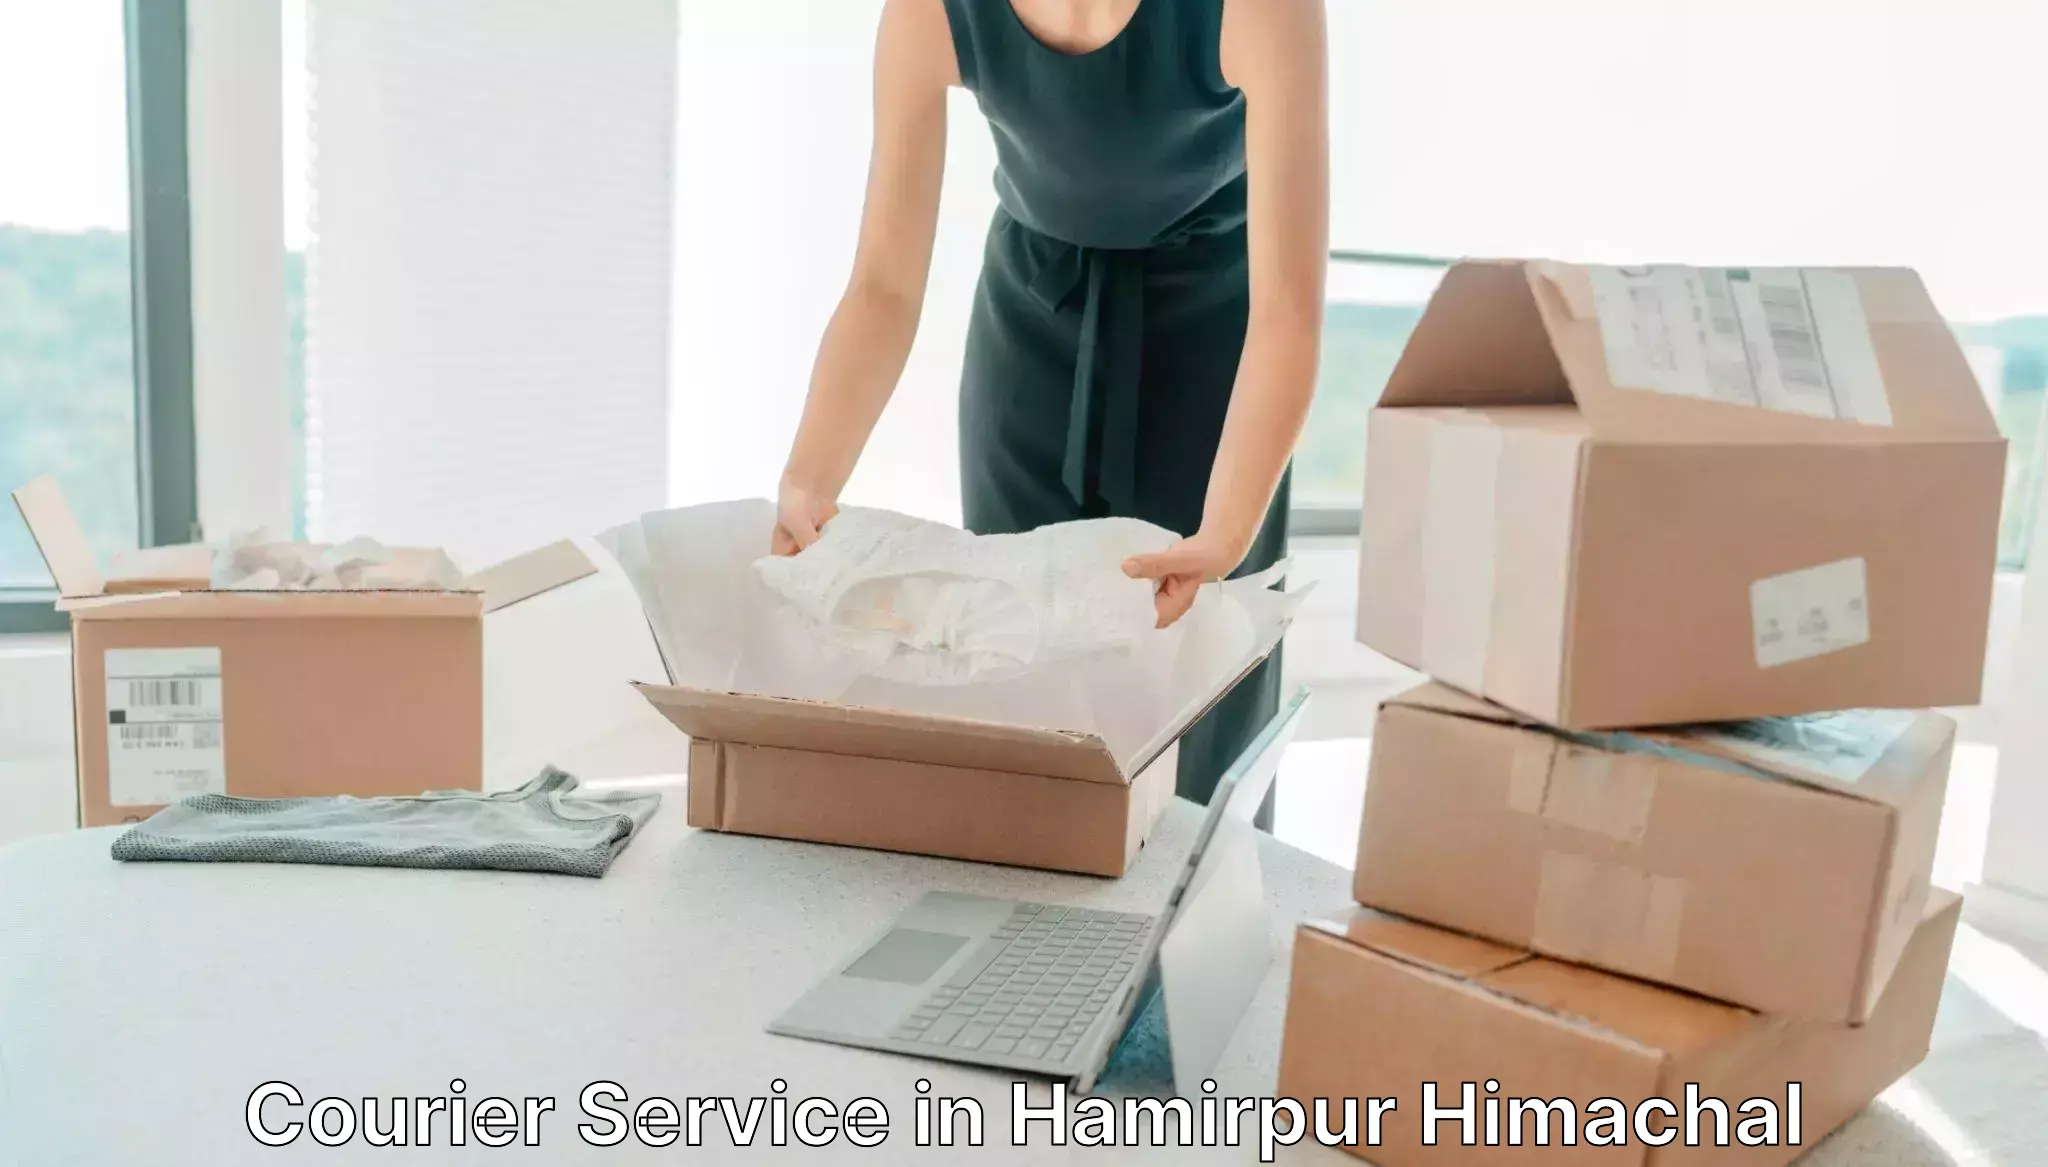 Digital courier platforms in Hamirpur Himachal